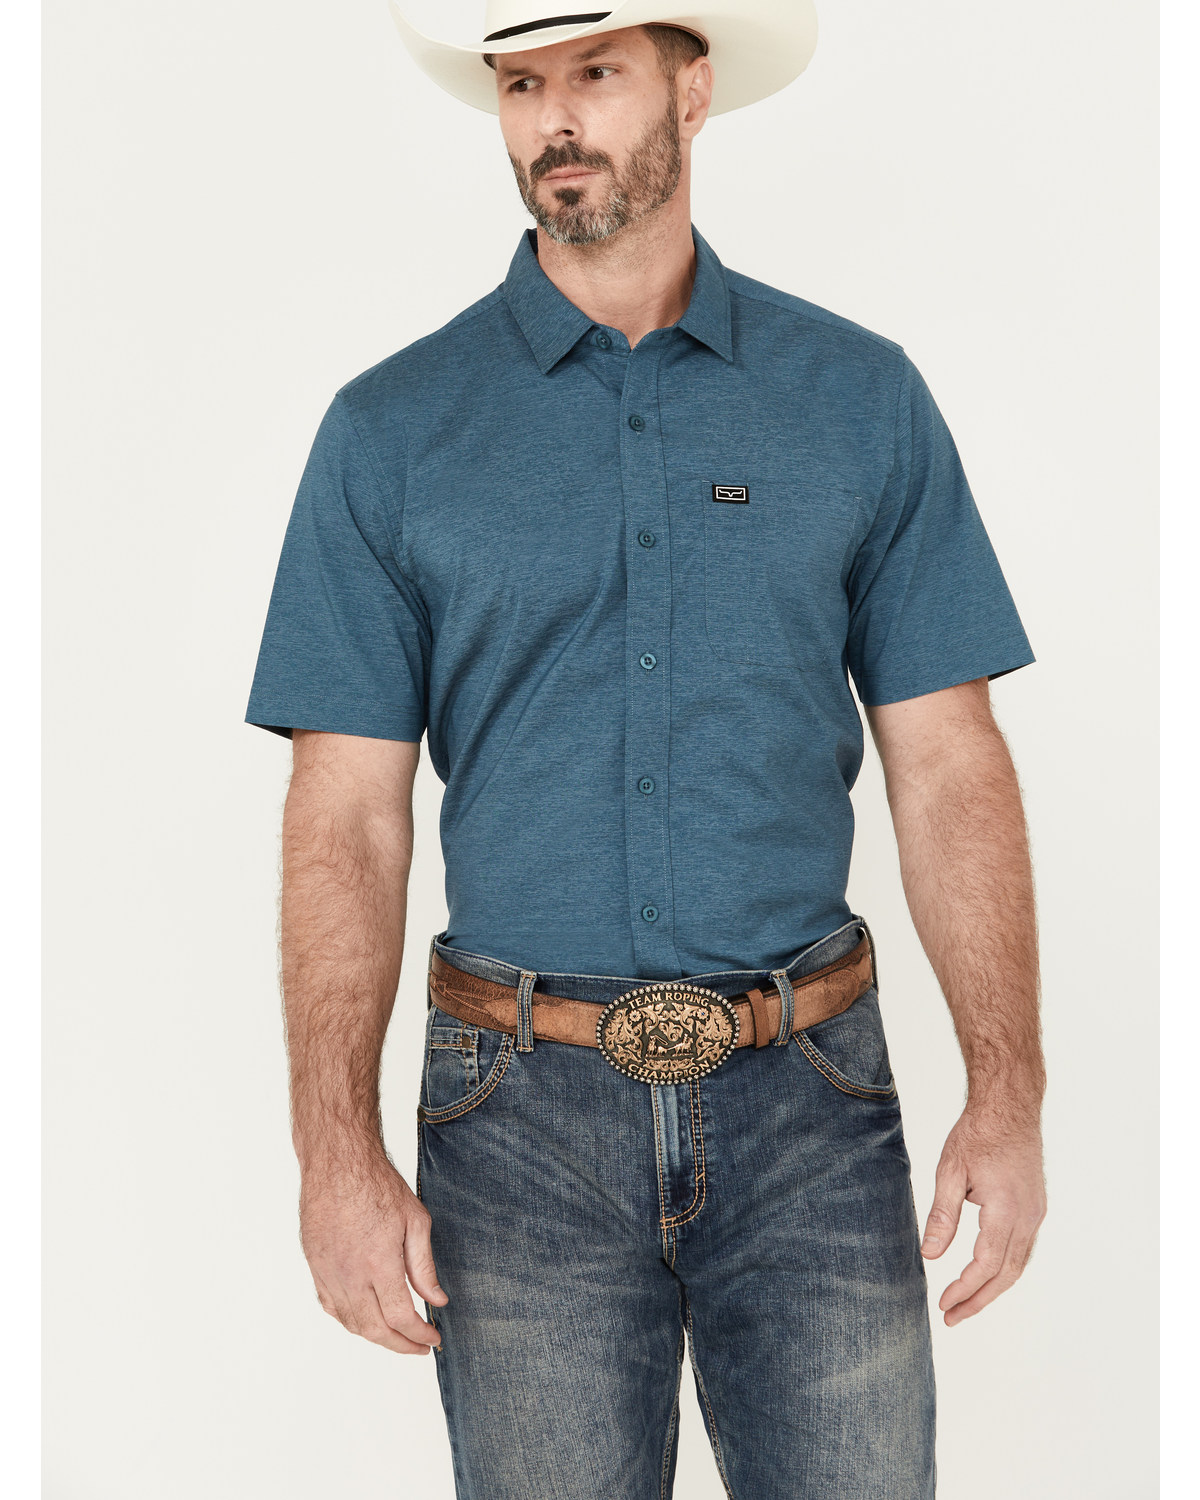 Kimes Ranch Men's Linville Short Sleeve Button Down Shirt